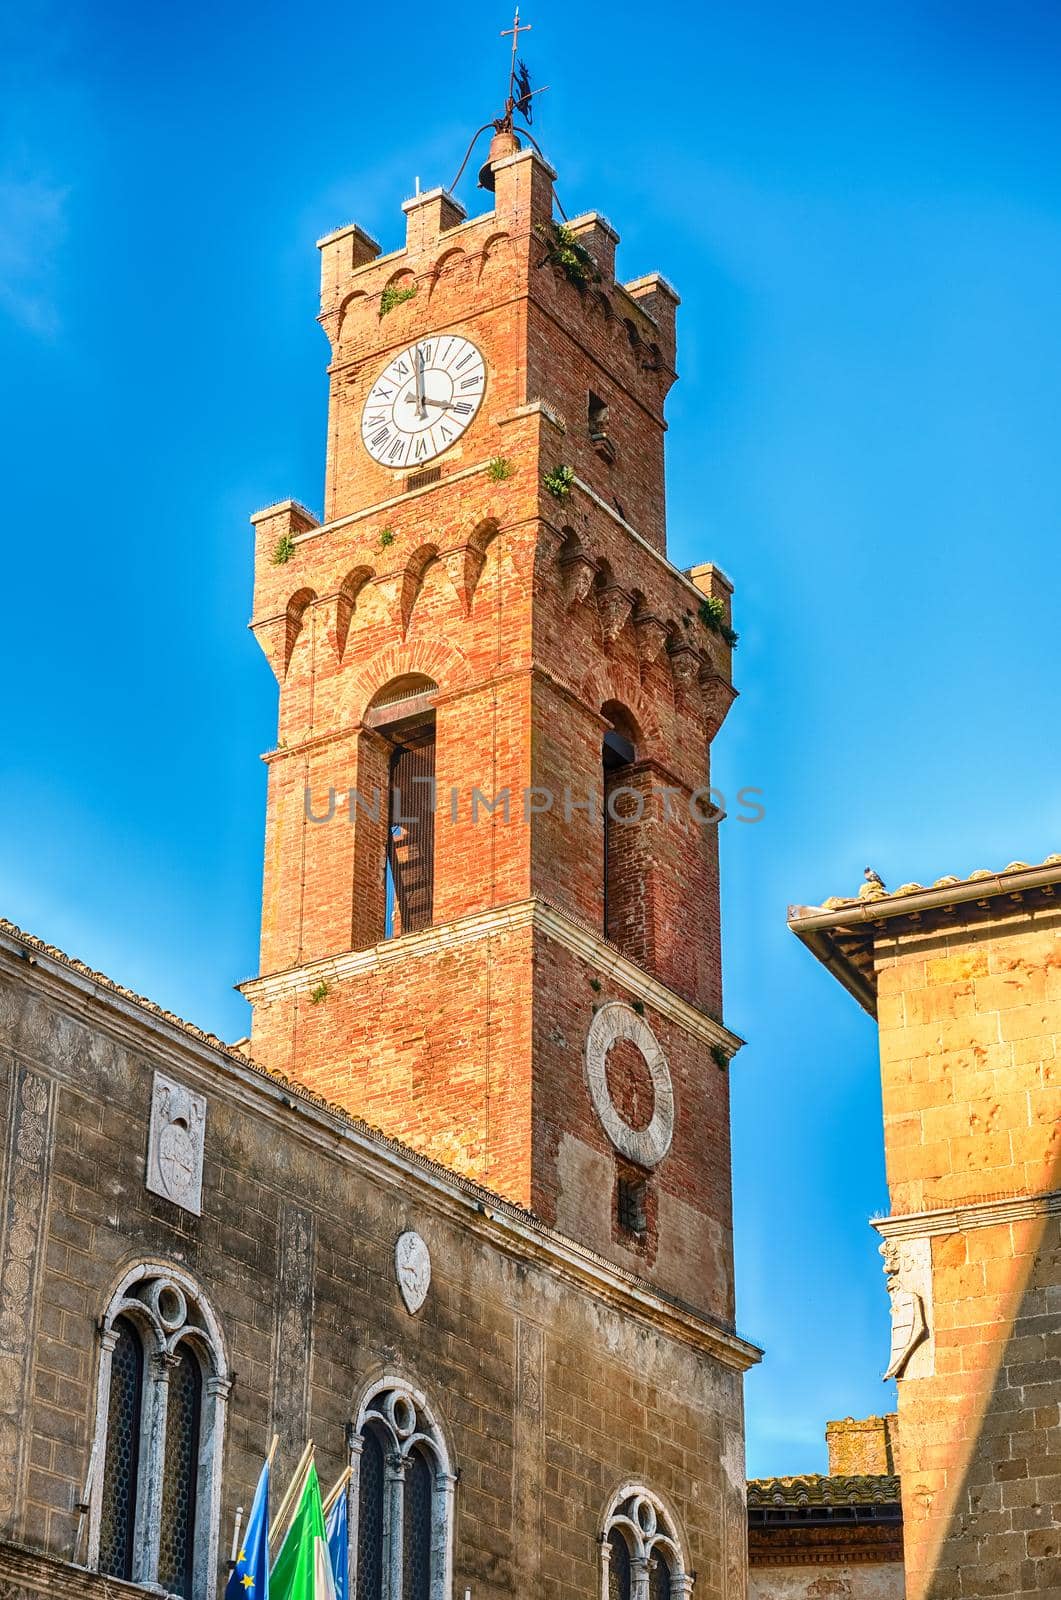 Clocktower of the Town Hall of Pienza, Tuscany, Italy by marcorubino